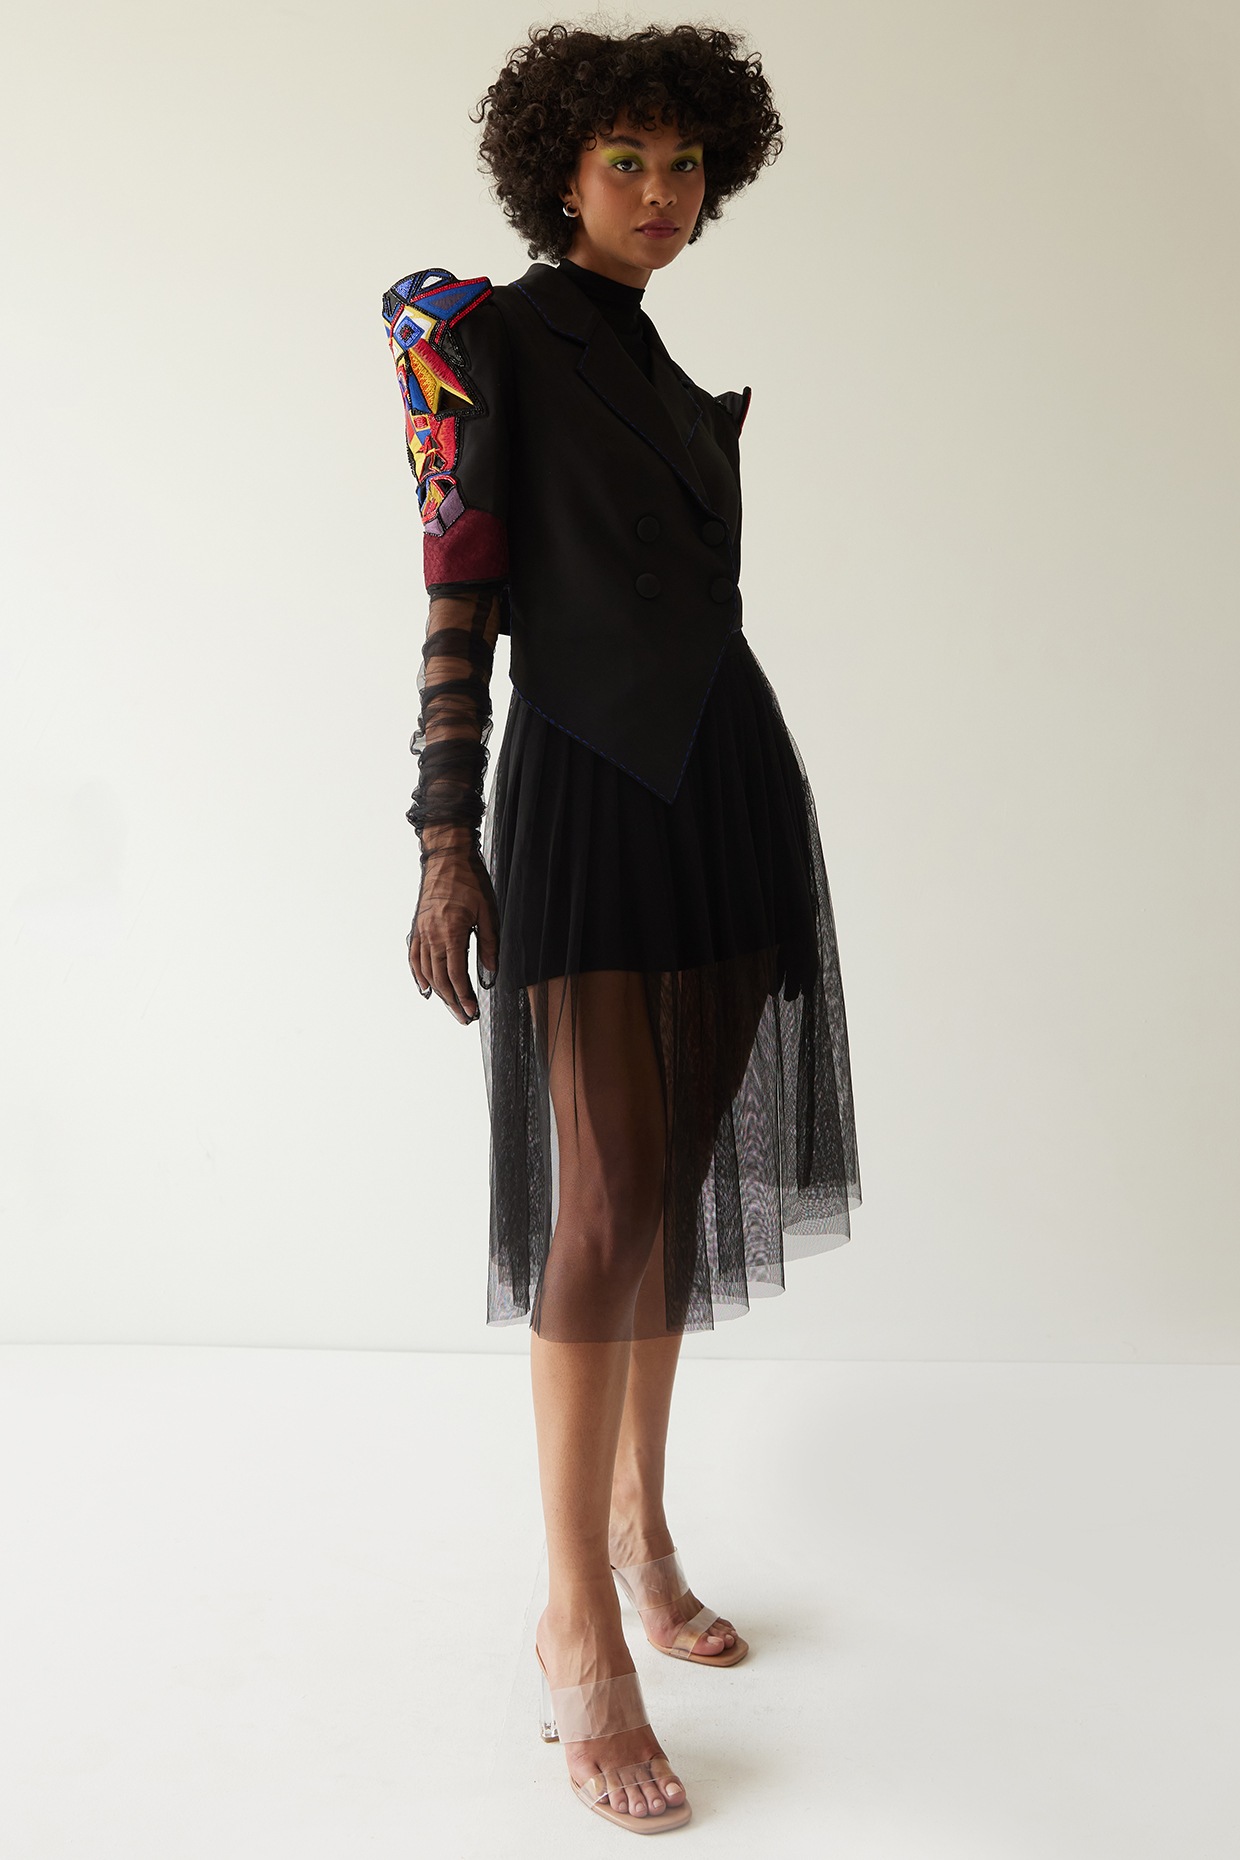 Kasper Plus Size Snap Front Stretch Crepe Skirt | Dillard's